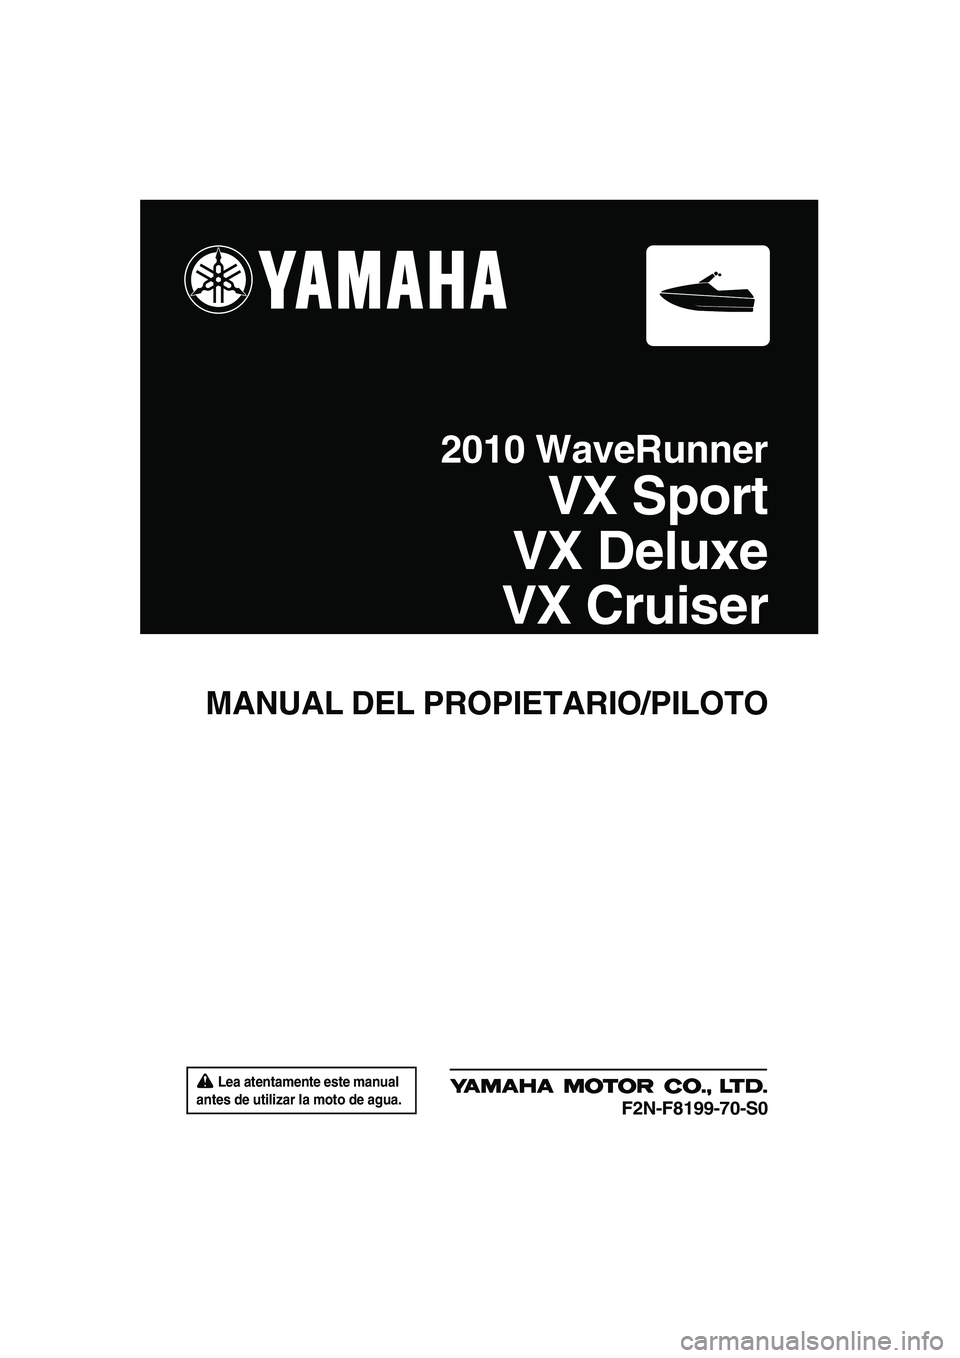 YAMAHA VX SPORT 2010  Manuale de Empleo (in Spanish) 